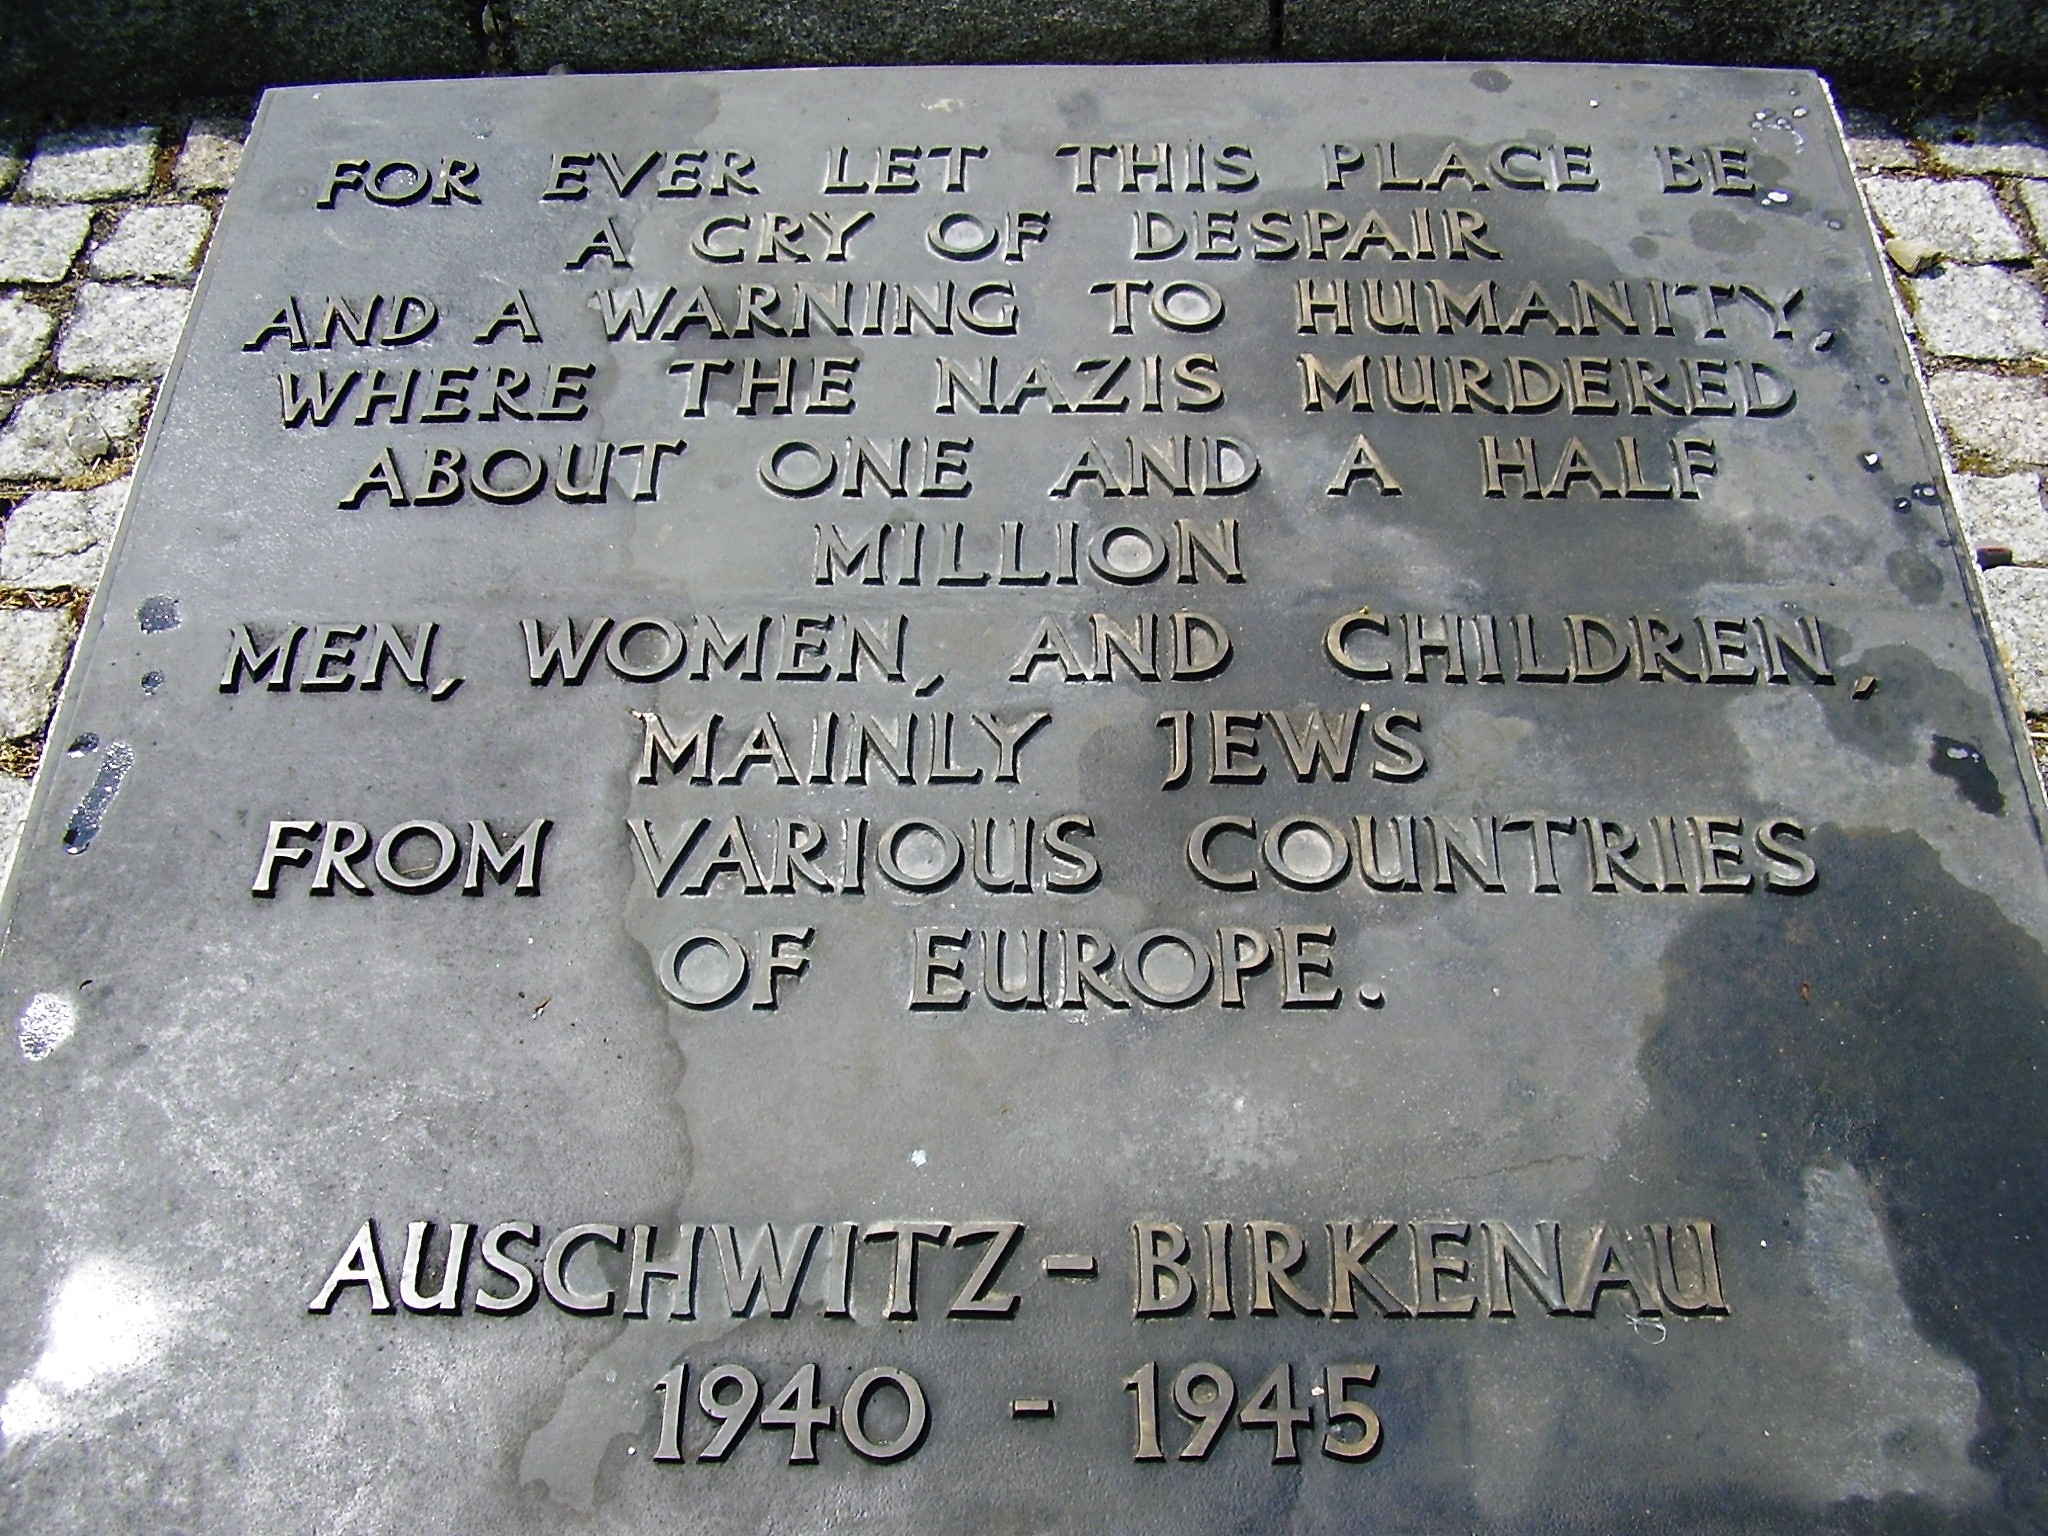 aushwitz-birkenau plaque